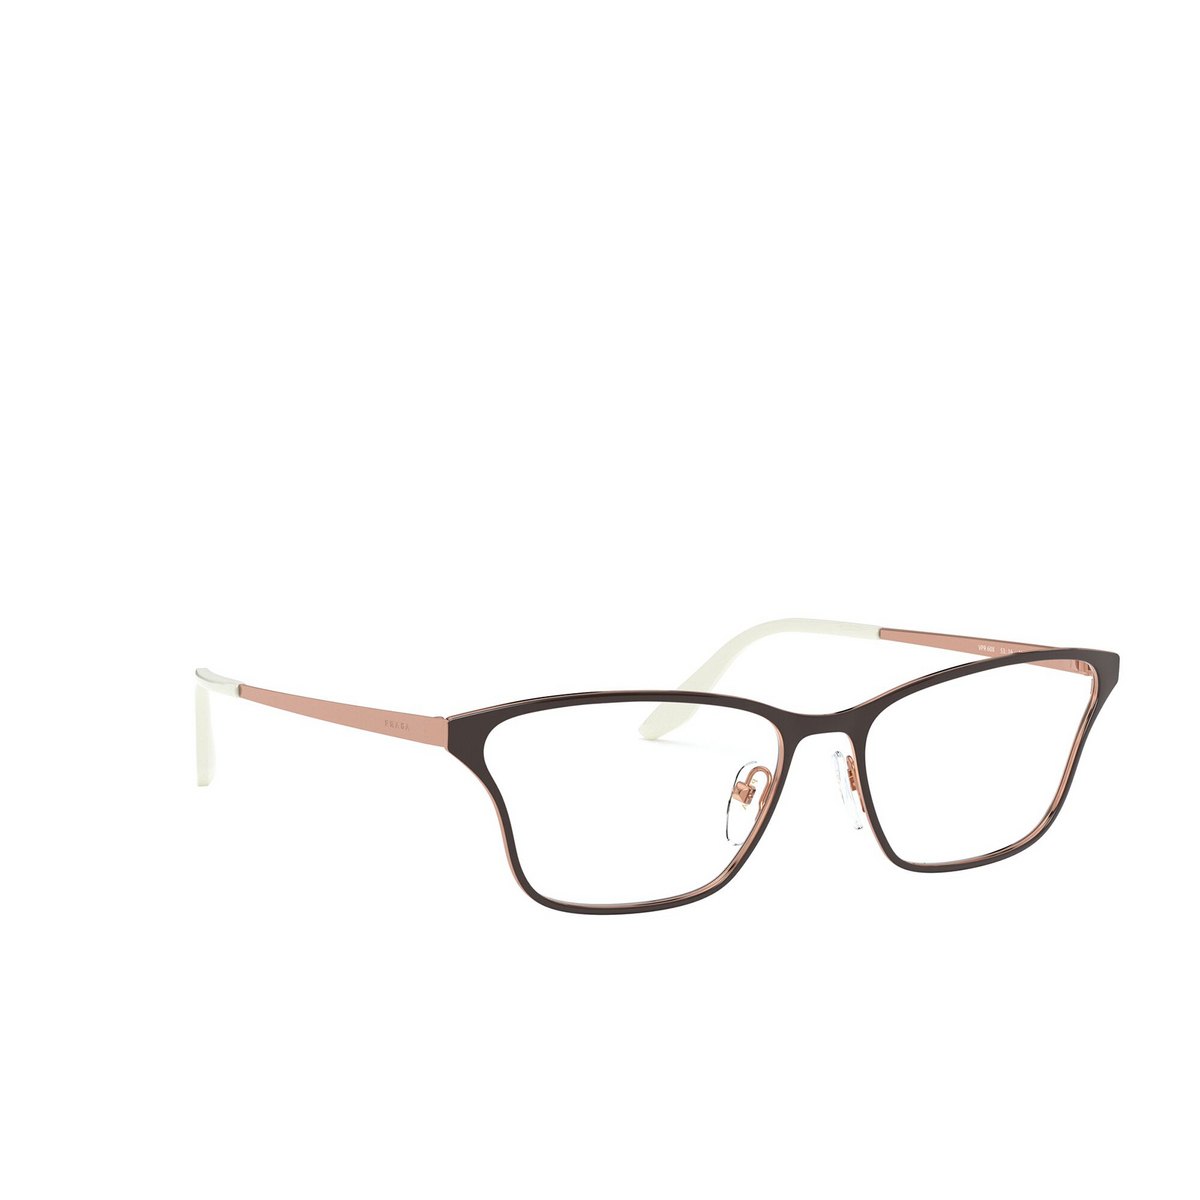 Prada® Butterfly Eyeglasses: PR 60XV color Top Brown / Rose Gold 3311O1 - three-quarters view.